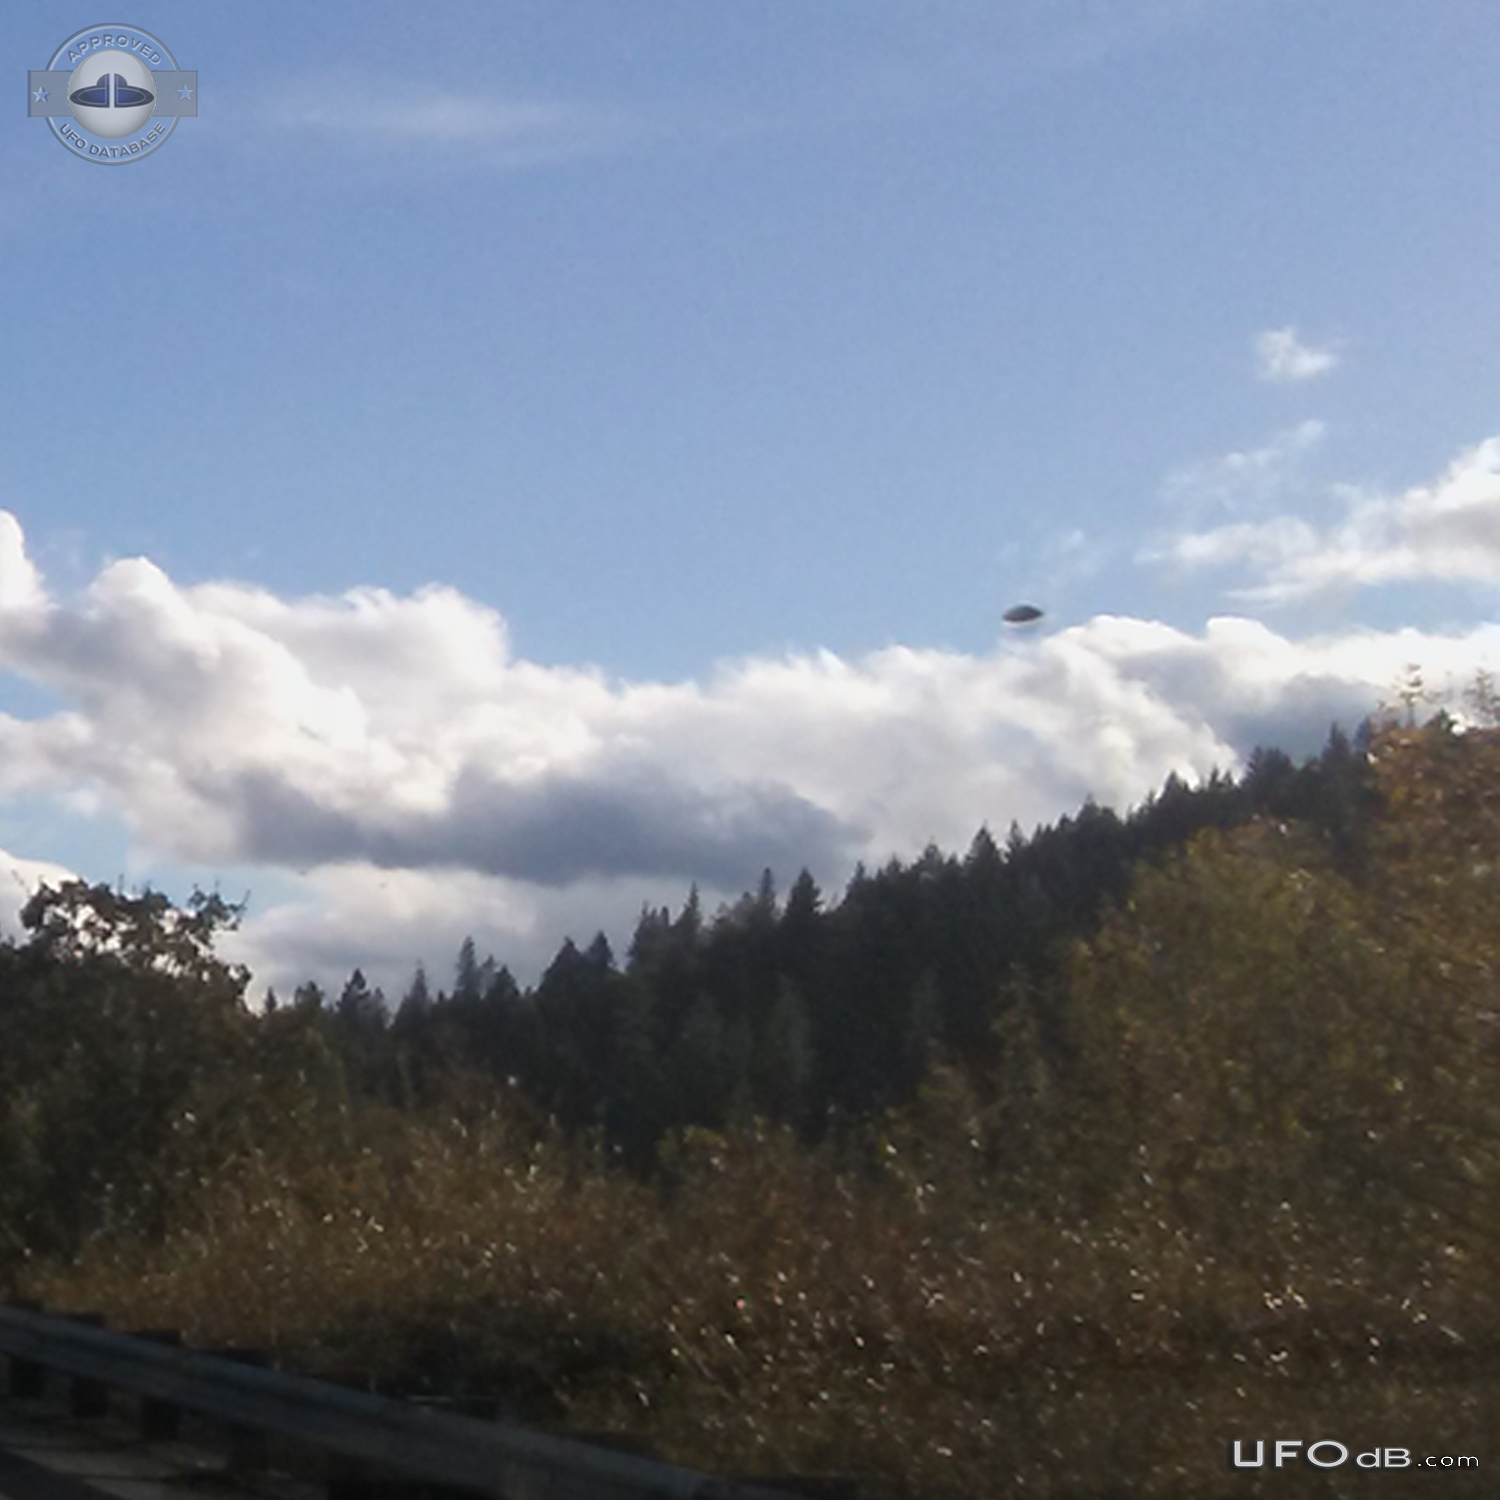 Photos near Grants Pass captured UFO on film - Merlin Oregon USA 2016 UFO Picture #807-3